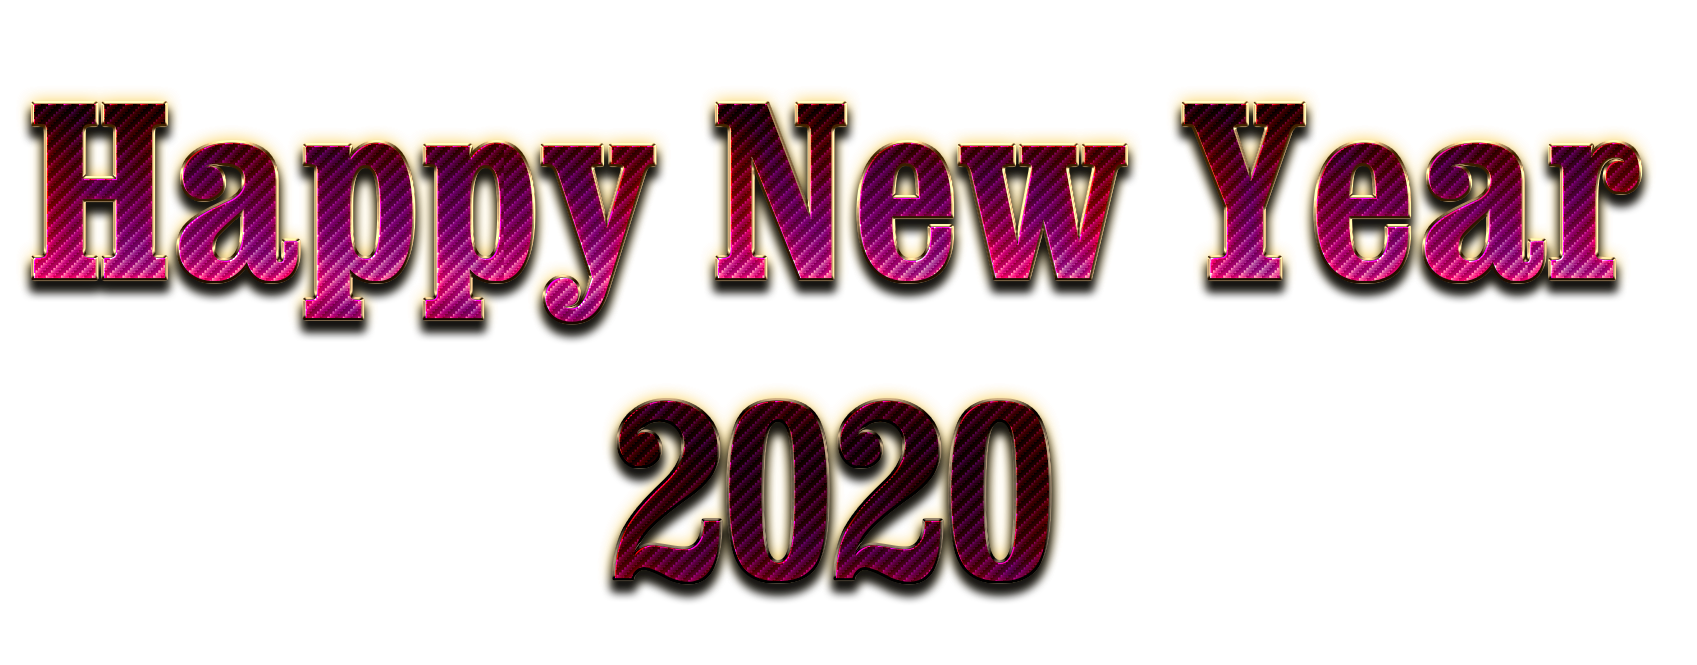 Jour de l'an 2020